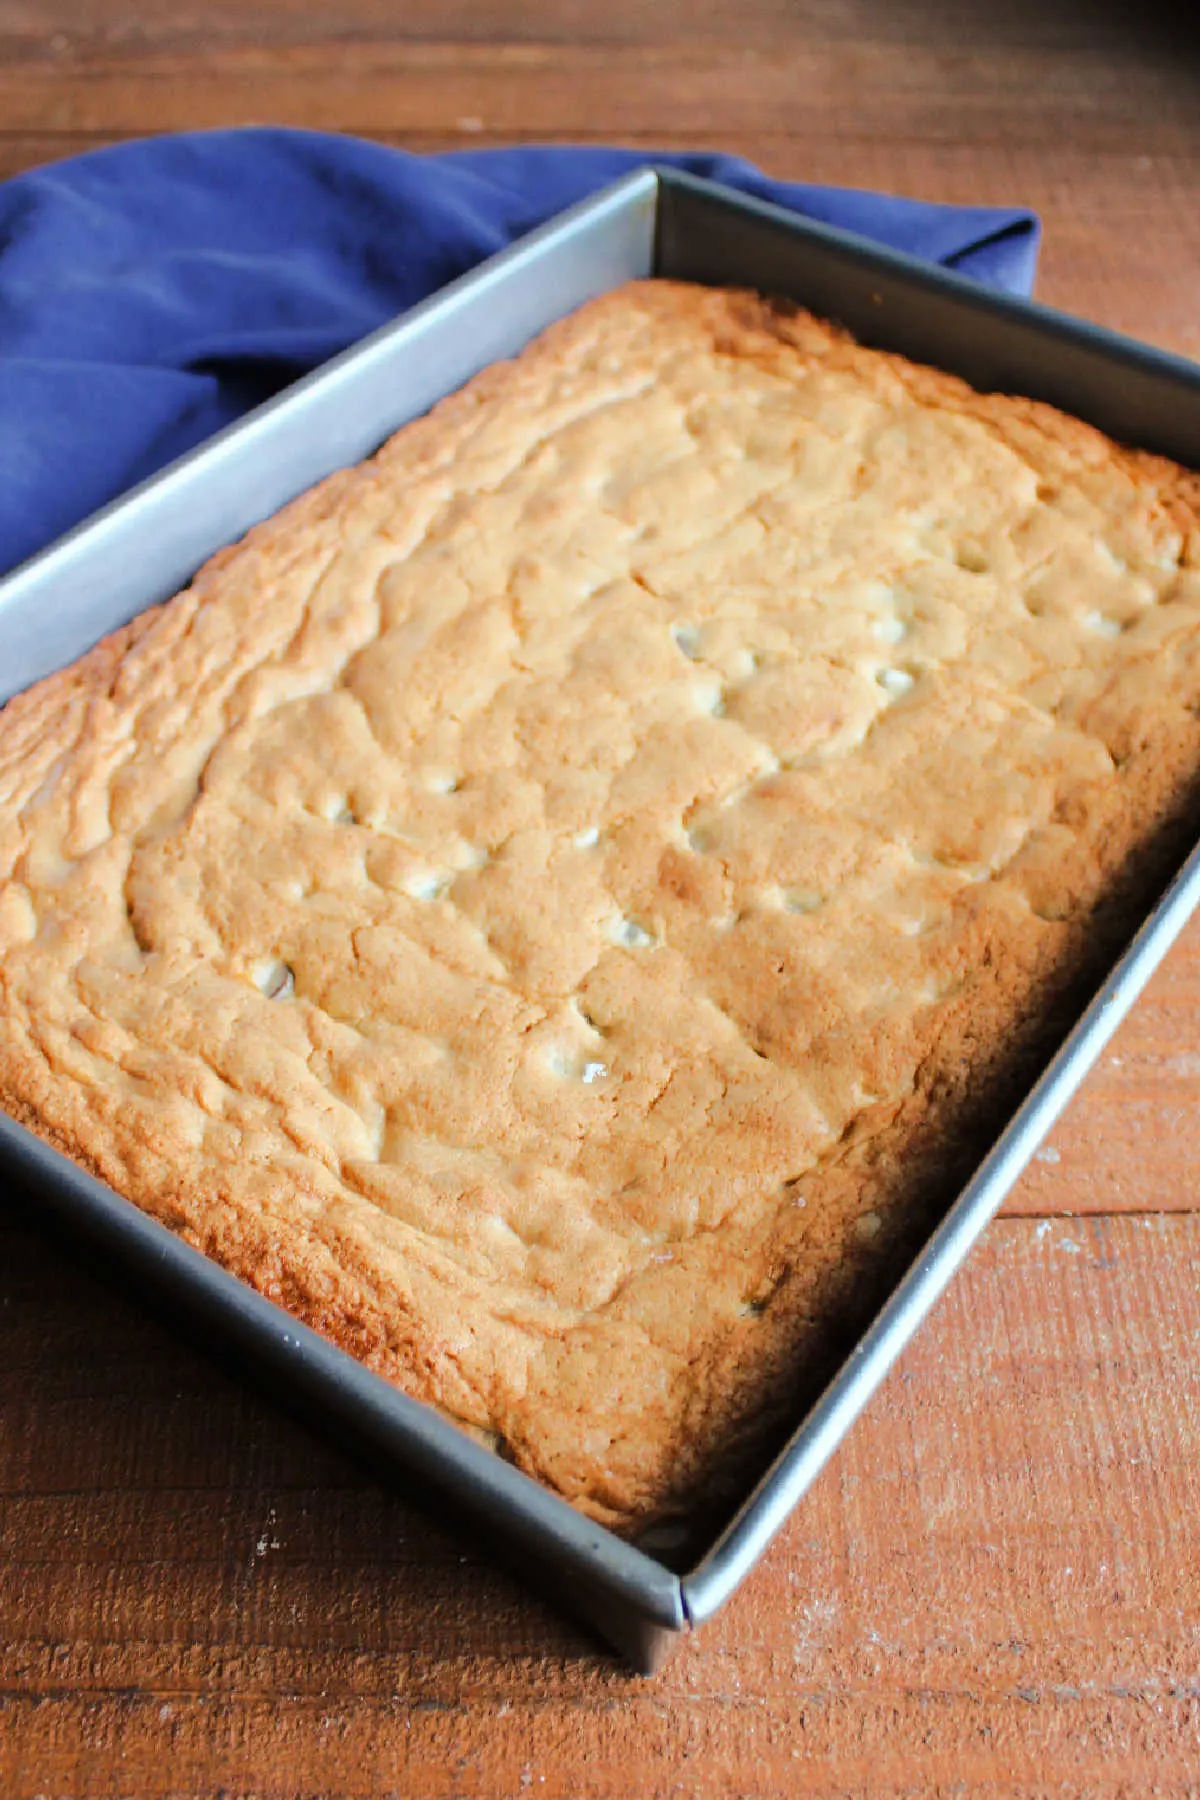 Pan of baked brown sugar bars showing nice golden top.